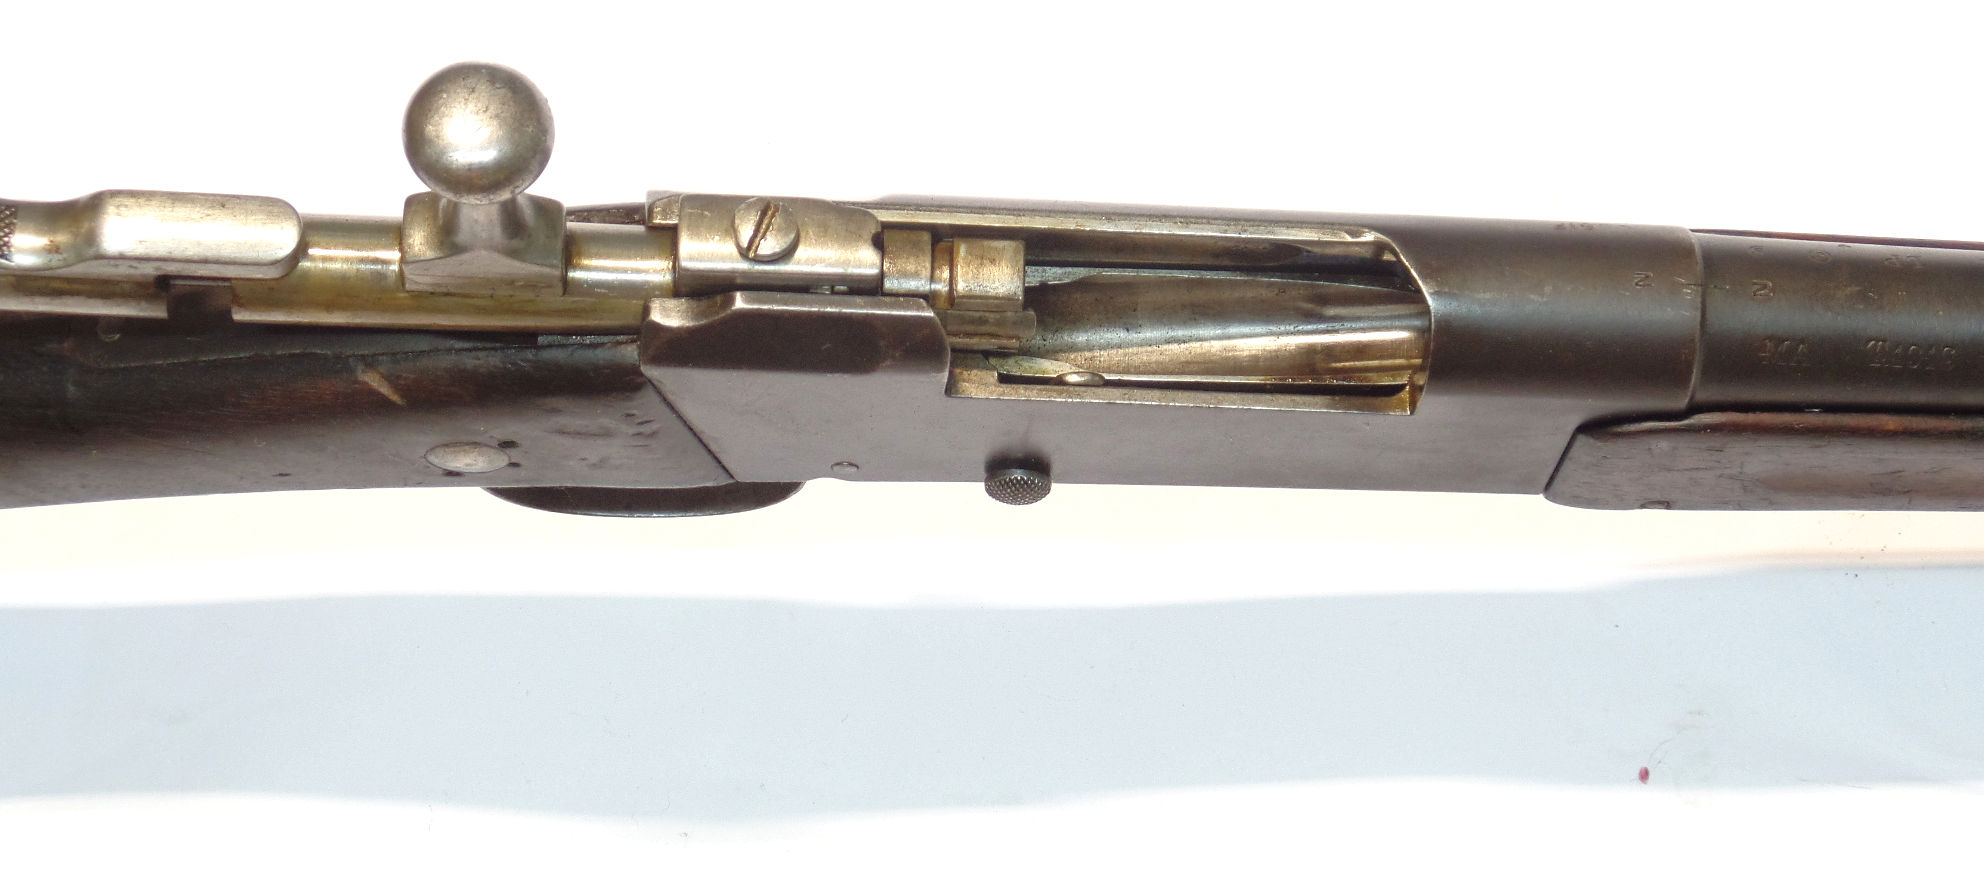 LEBEL - 1886M93 calibre 8mmLEBEL